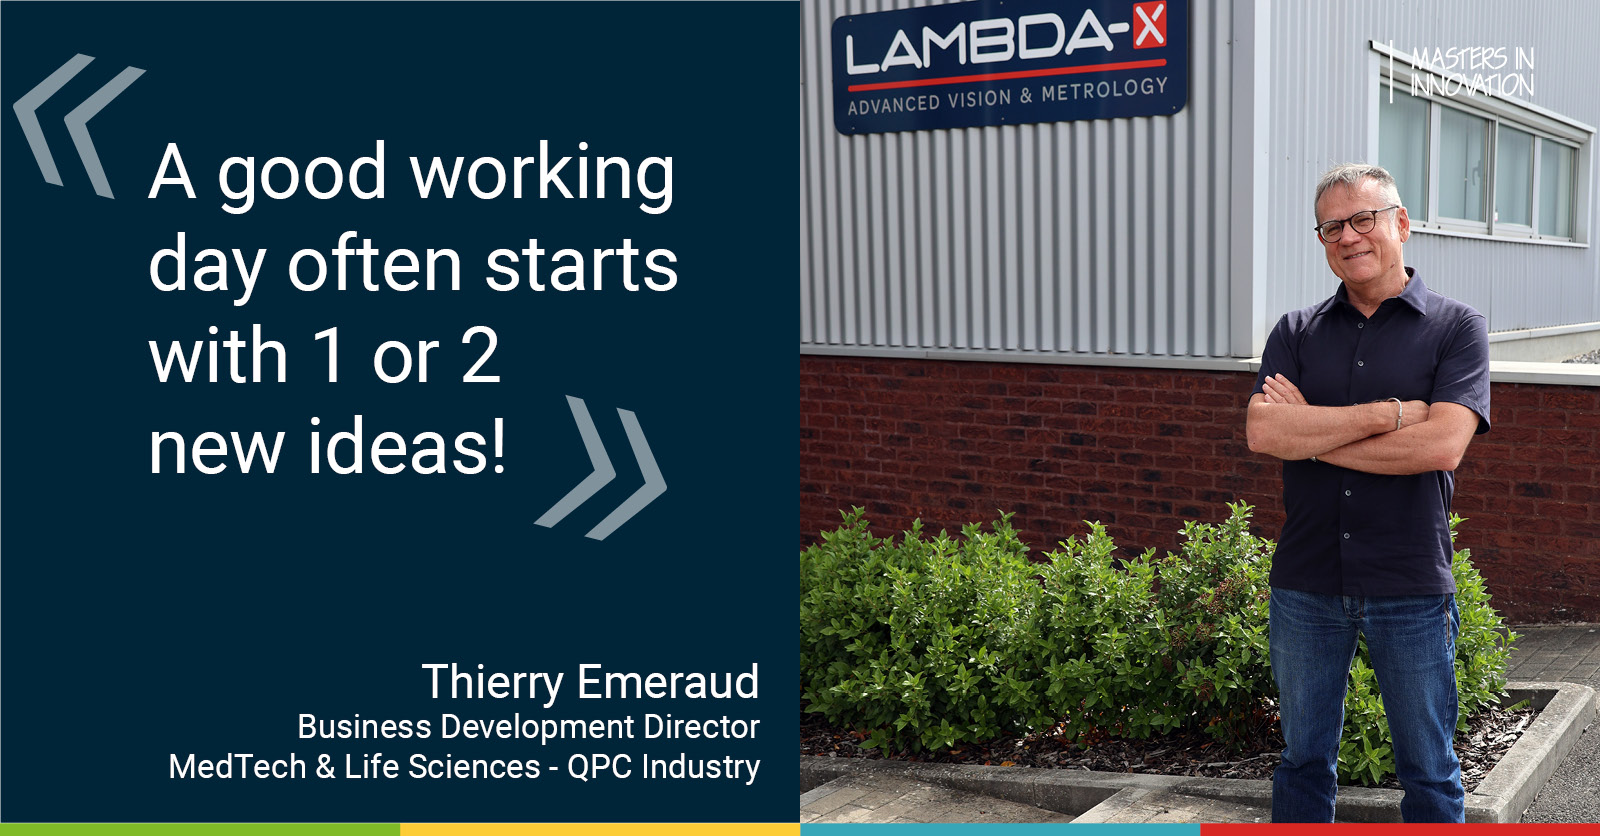 Lambda-X High Tech Innovation - Meet the team - Thierry Emeraud